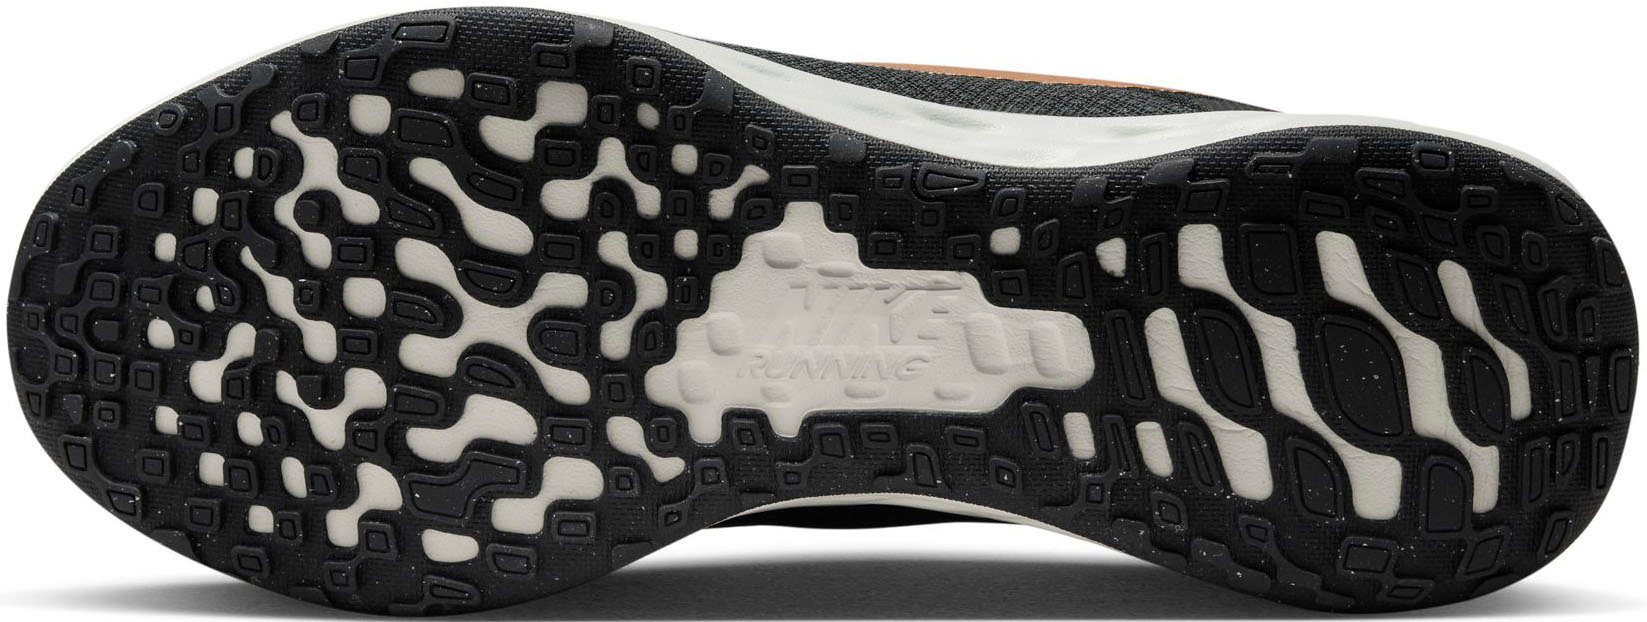 Laufschuh 6 Nike REVOLUTION NATURE NEXT DK-SMOKE-GREY-METALLIC-COPPER